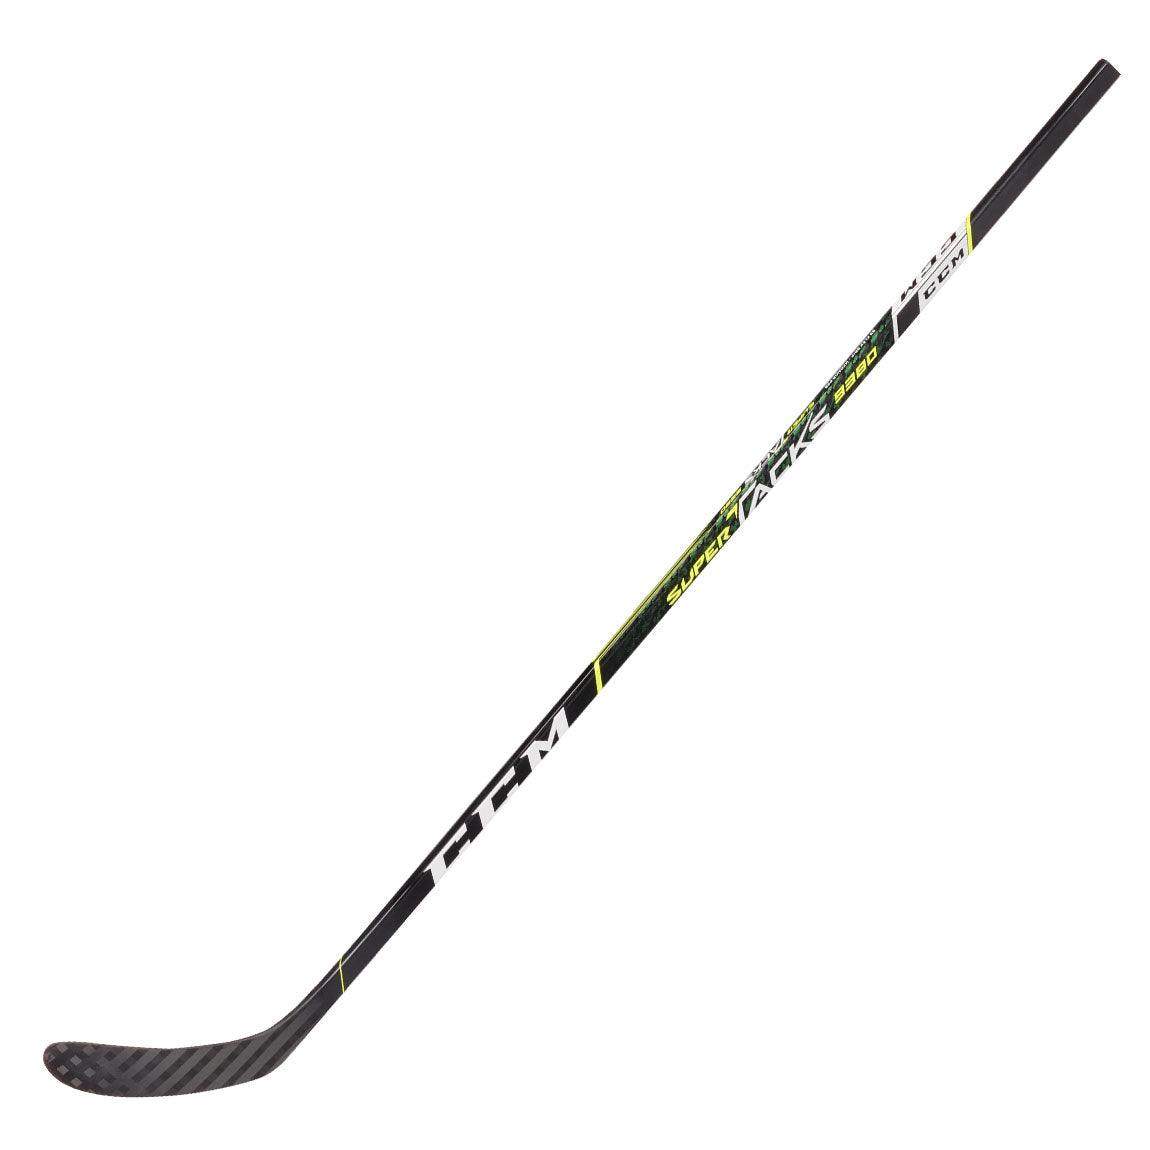 Super Tacks 9380 Hockey Stick - Intermediate - Sports Excellence